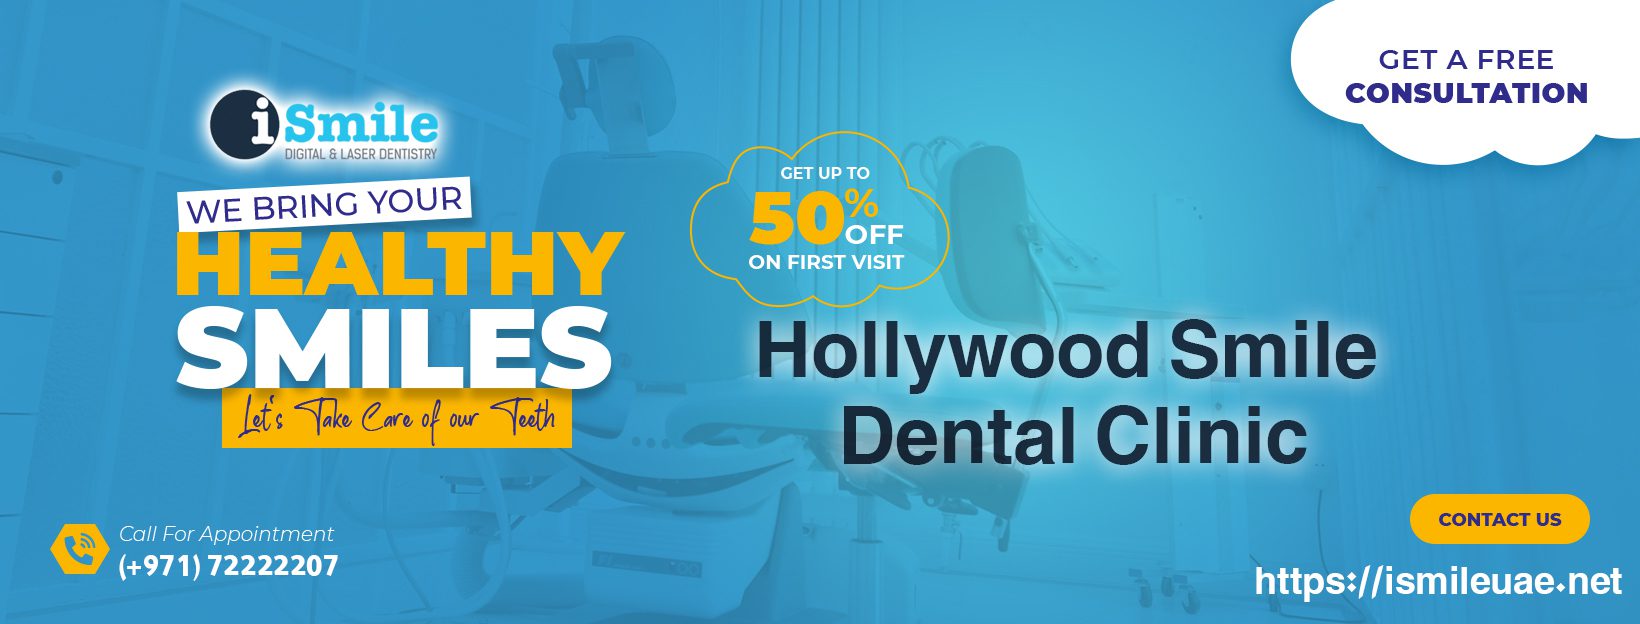 iSmile Dental Center: Your Gateway to Hollywood Smile Dentistry